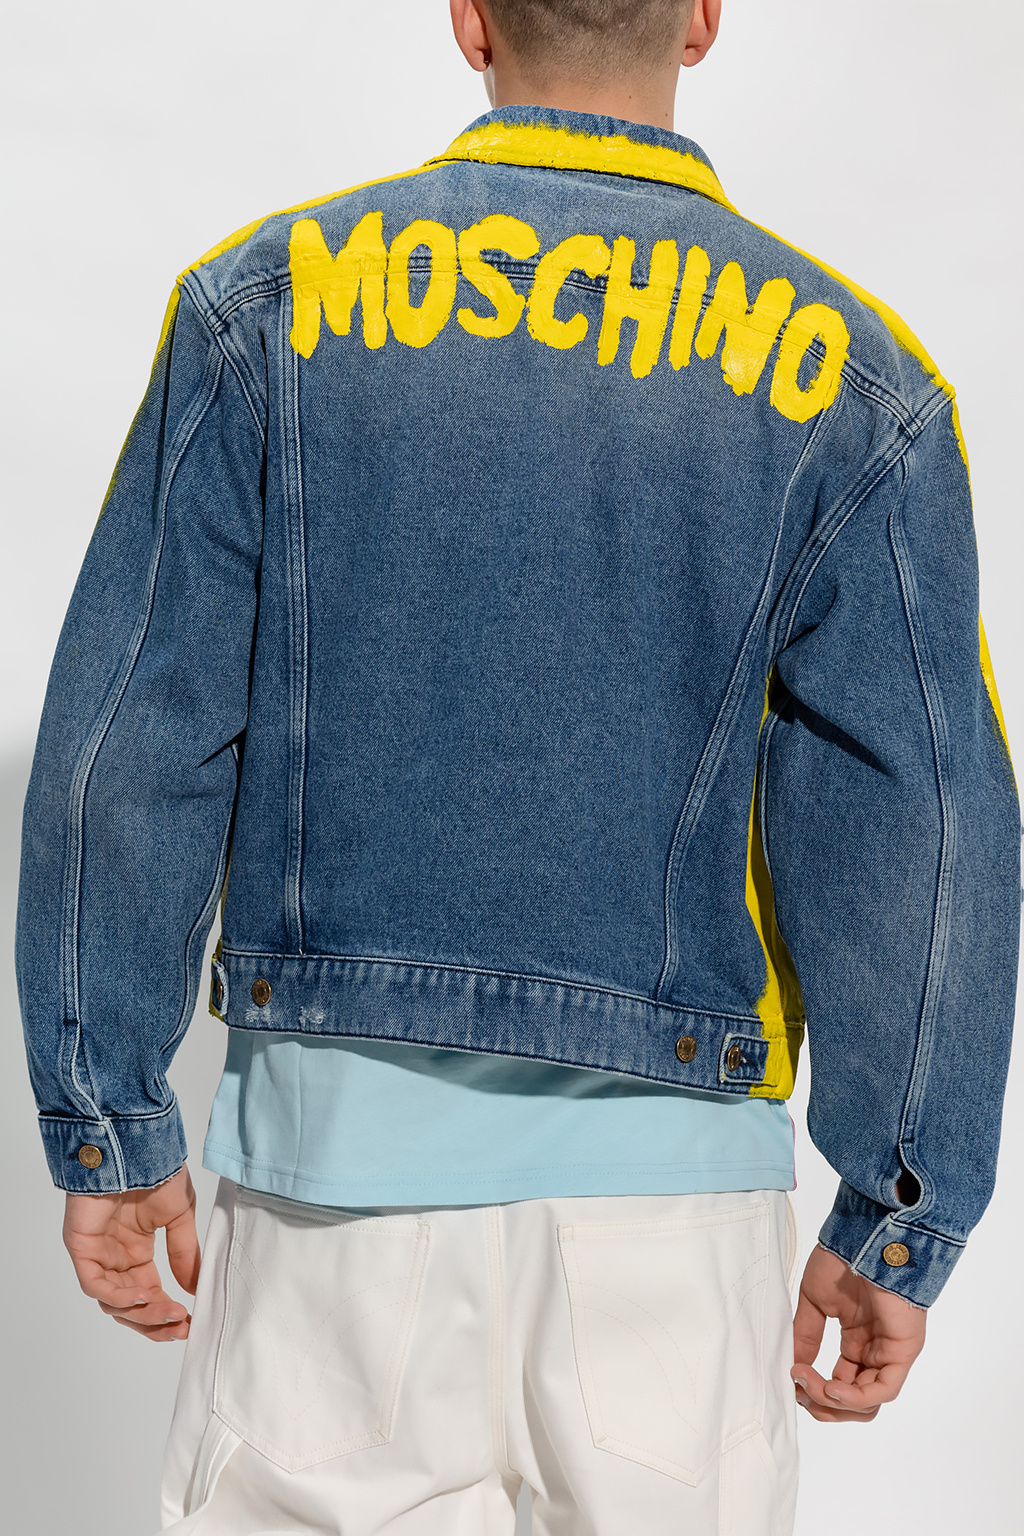 Moschino Denim jacket